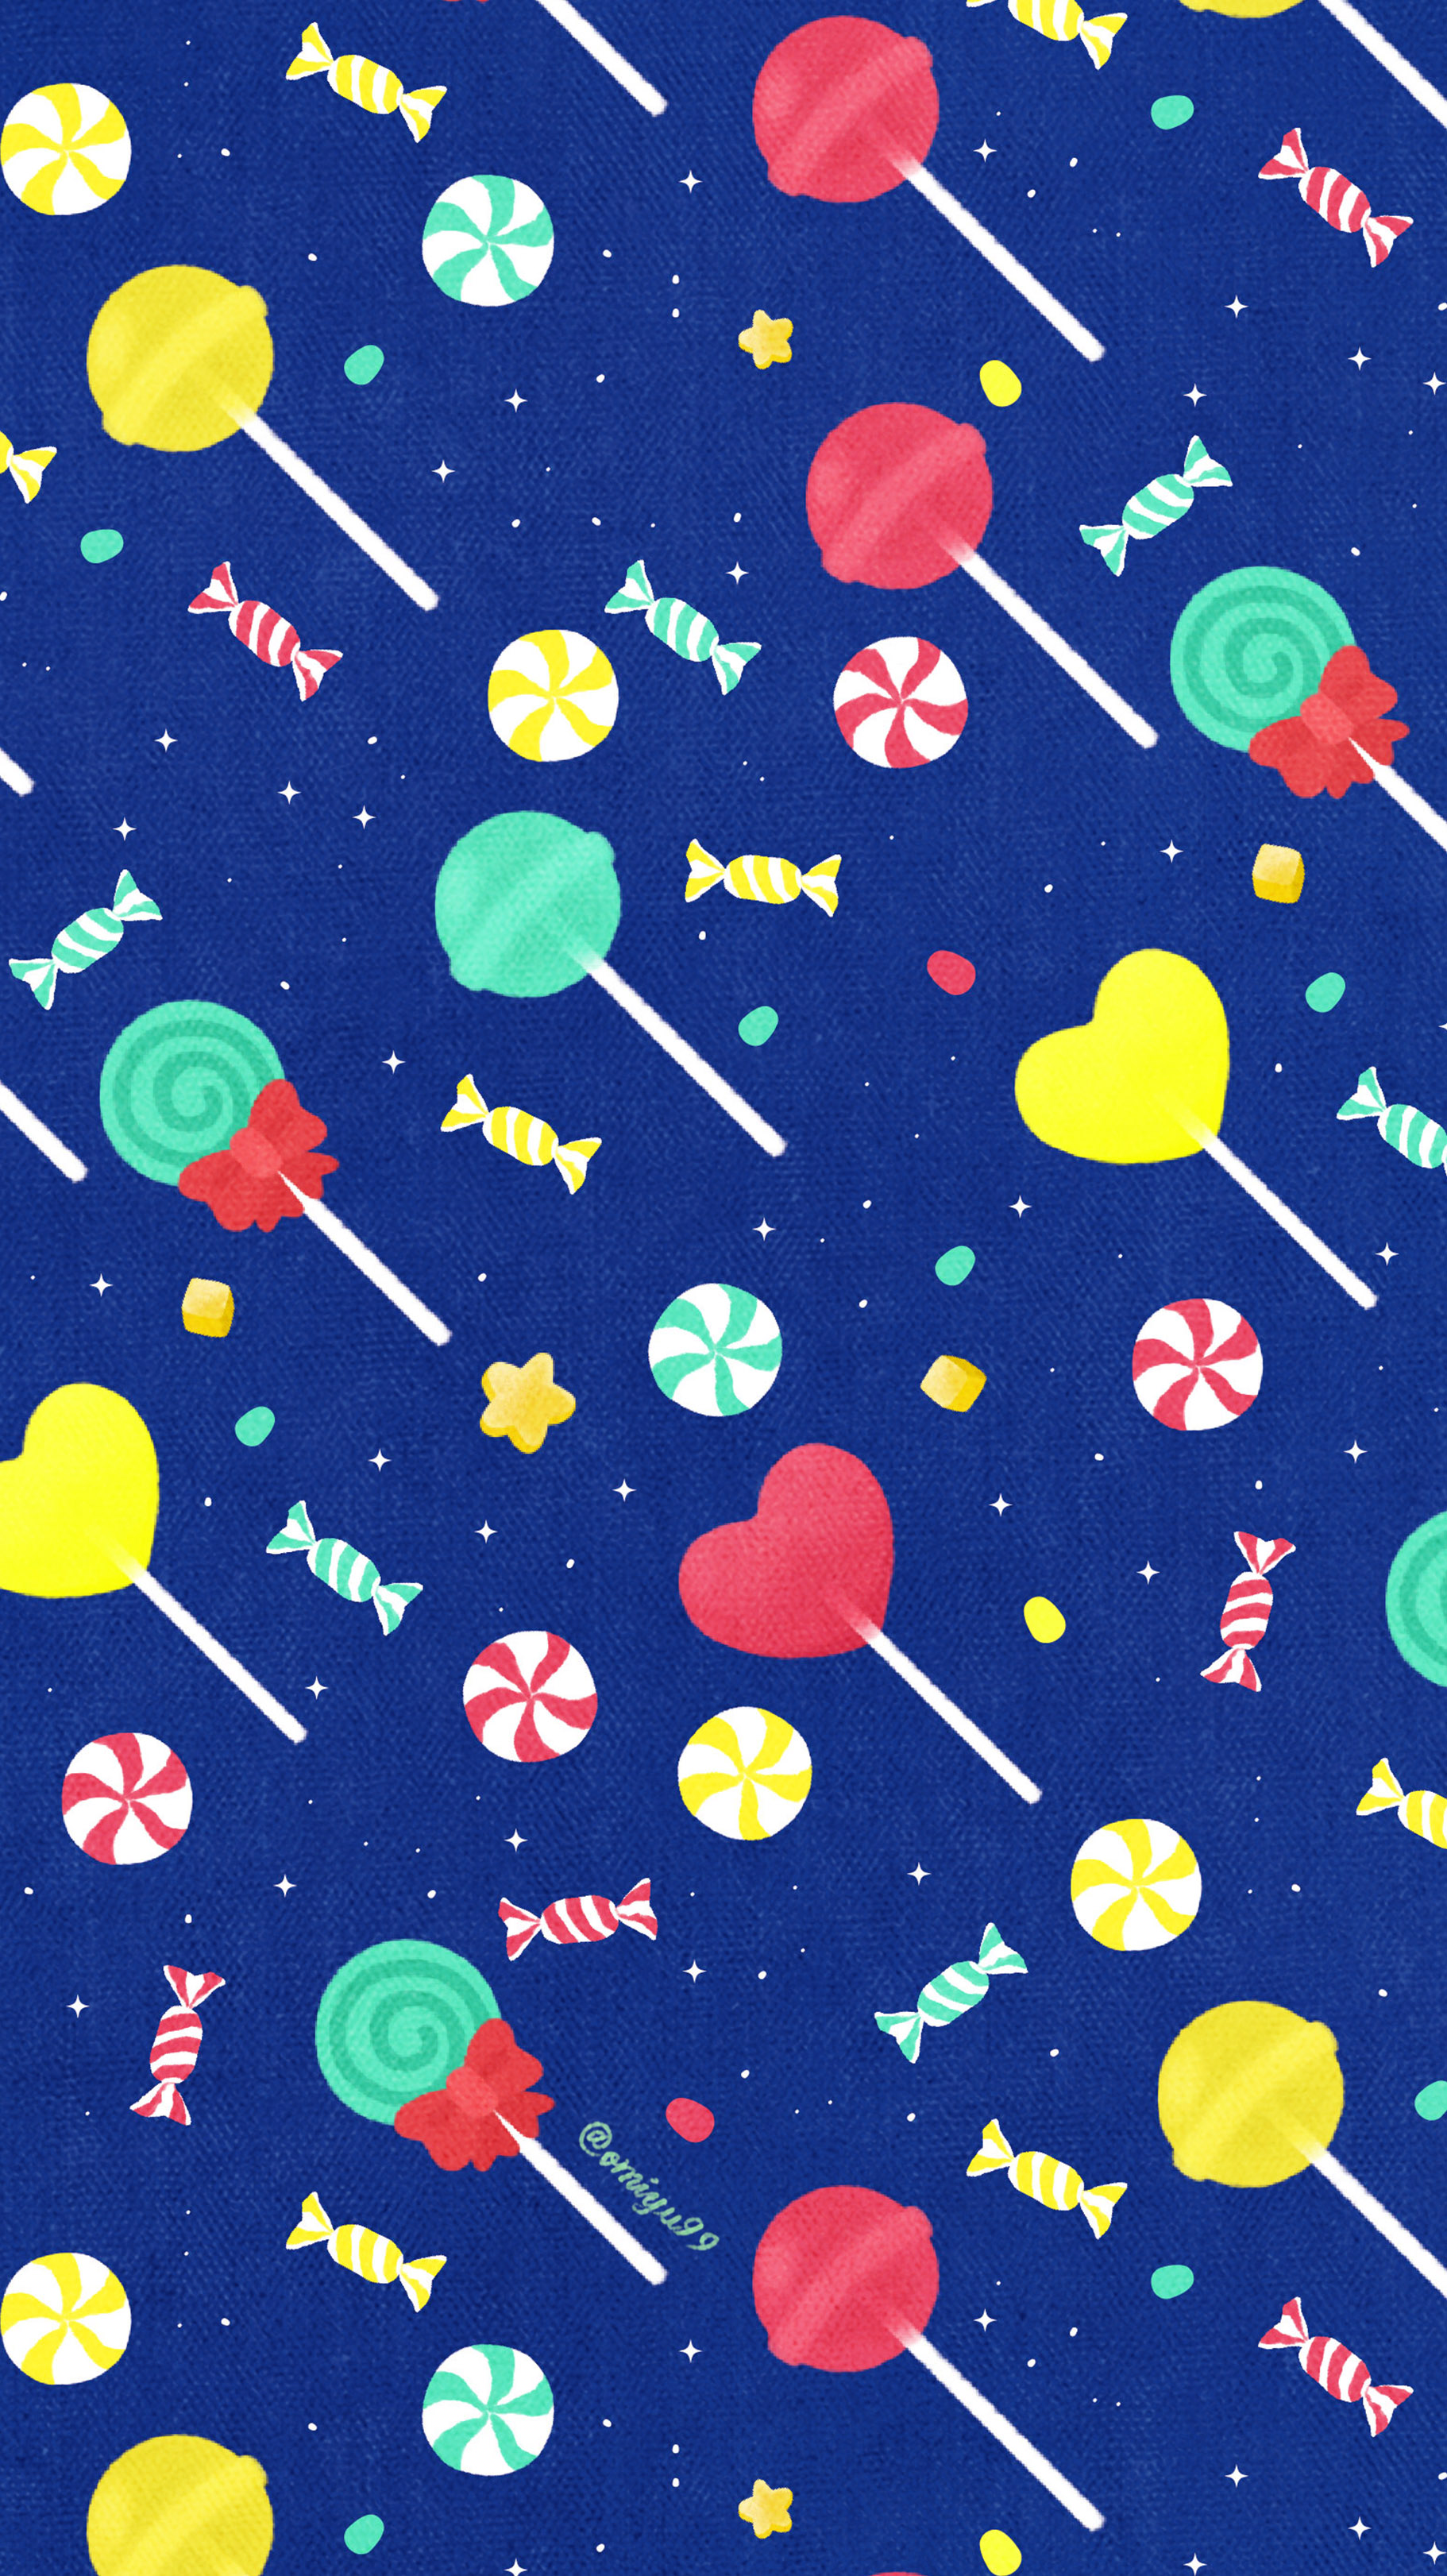 تويتر Omiyu お返事遅くなります على تويتر 飴ちゃんな壁紙 Illust Illustration 壁紙 イラスト Iphone壁紙 キャンディ 飴 食べ物 Candy Lollipop T Co Xsv7cjg3to